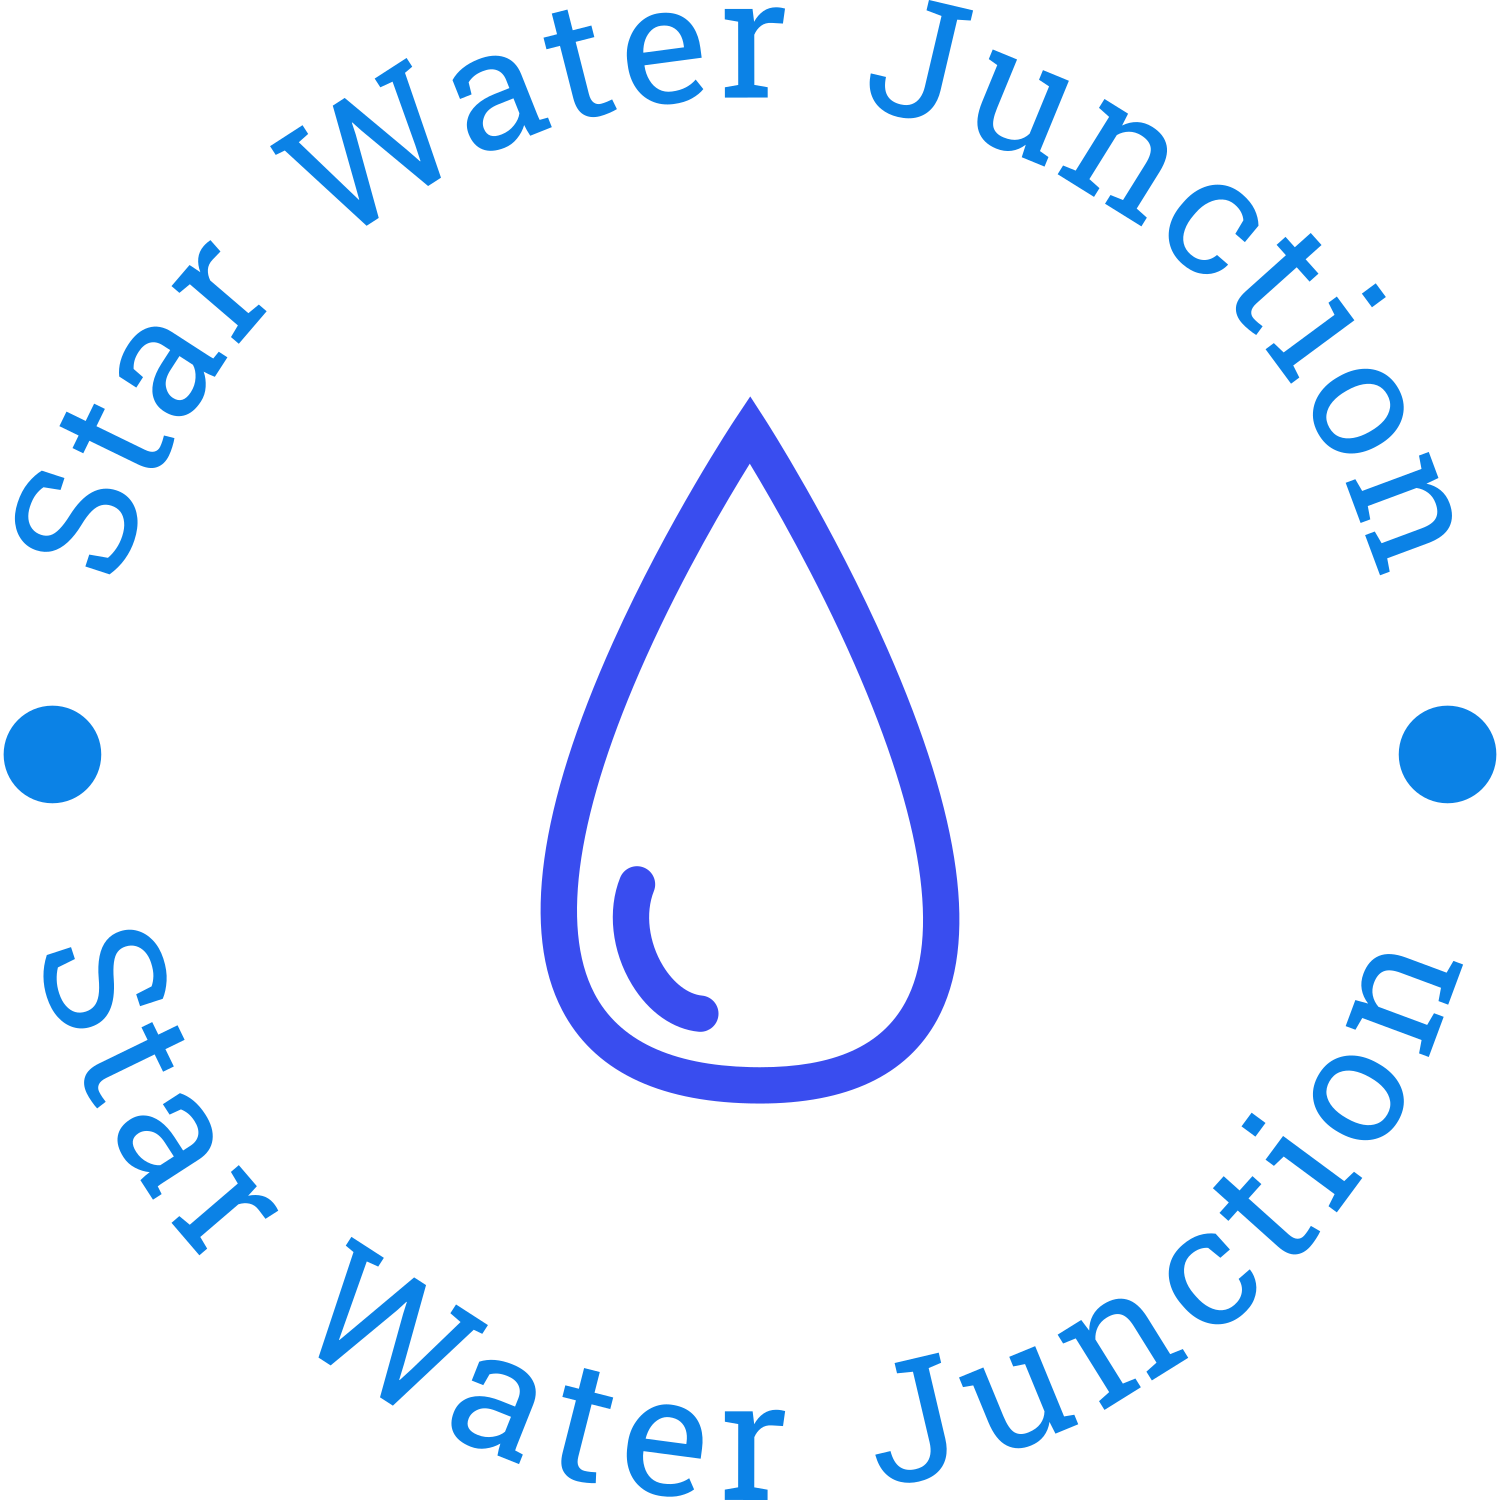 Star Water Junction